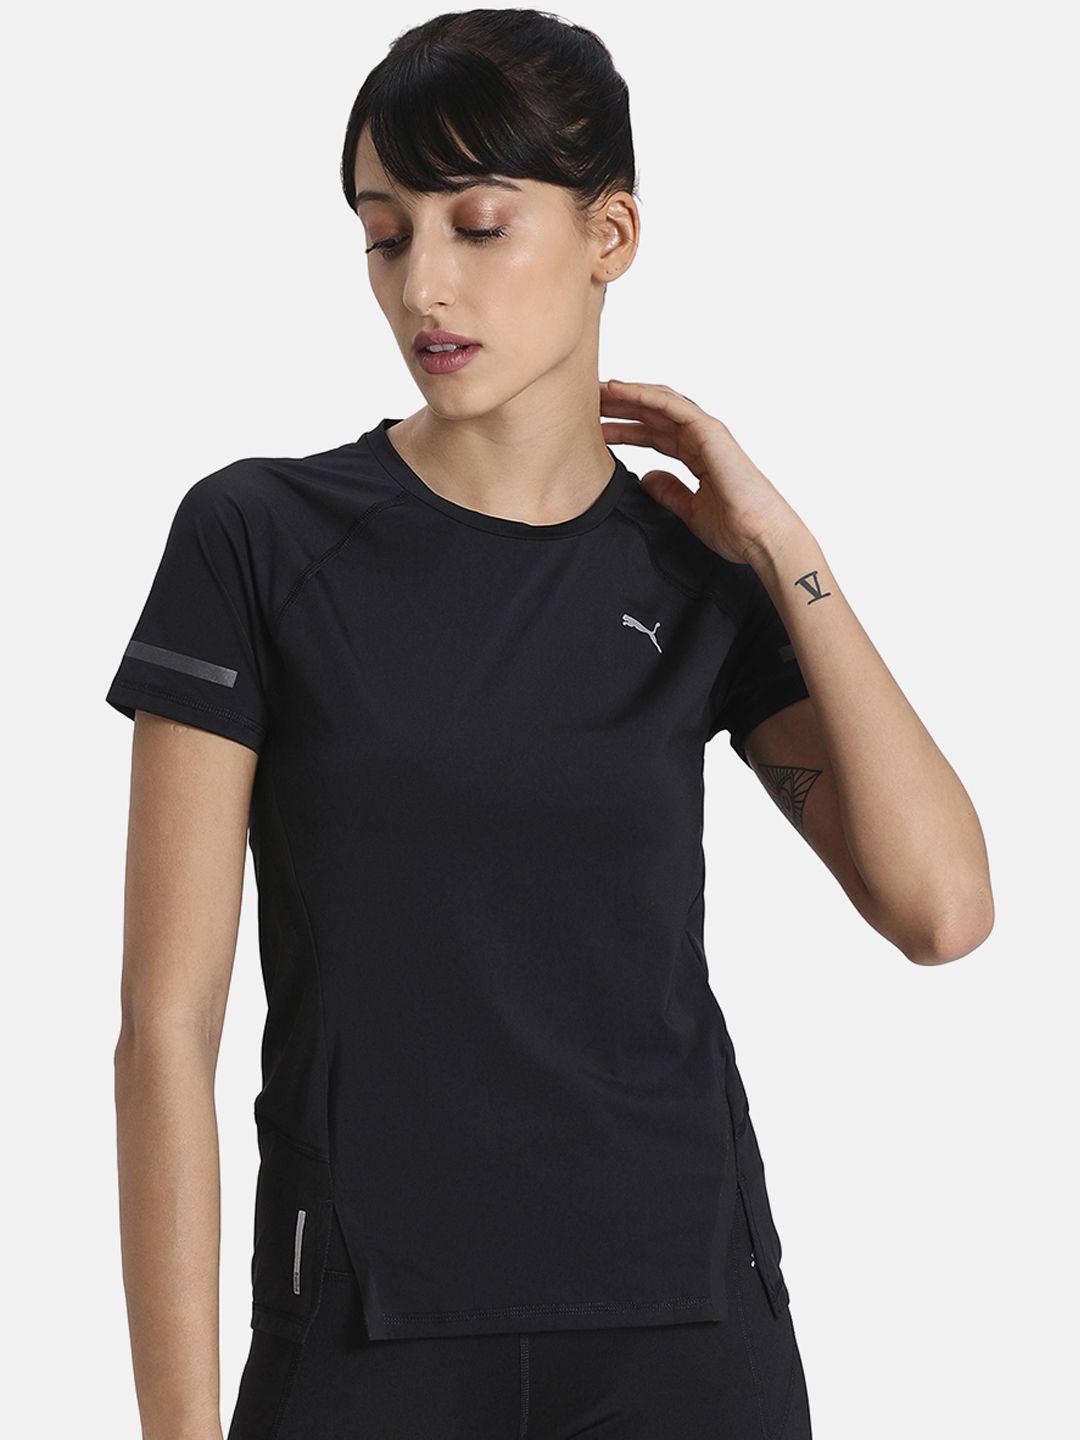 Puma Women Black Solid Round Neck T-shirt Price in India